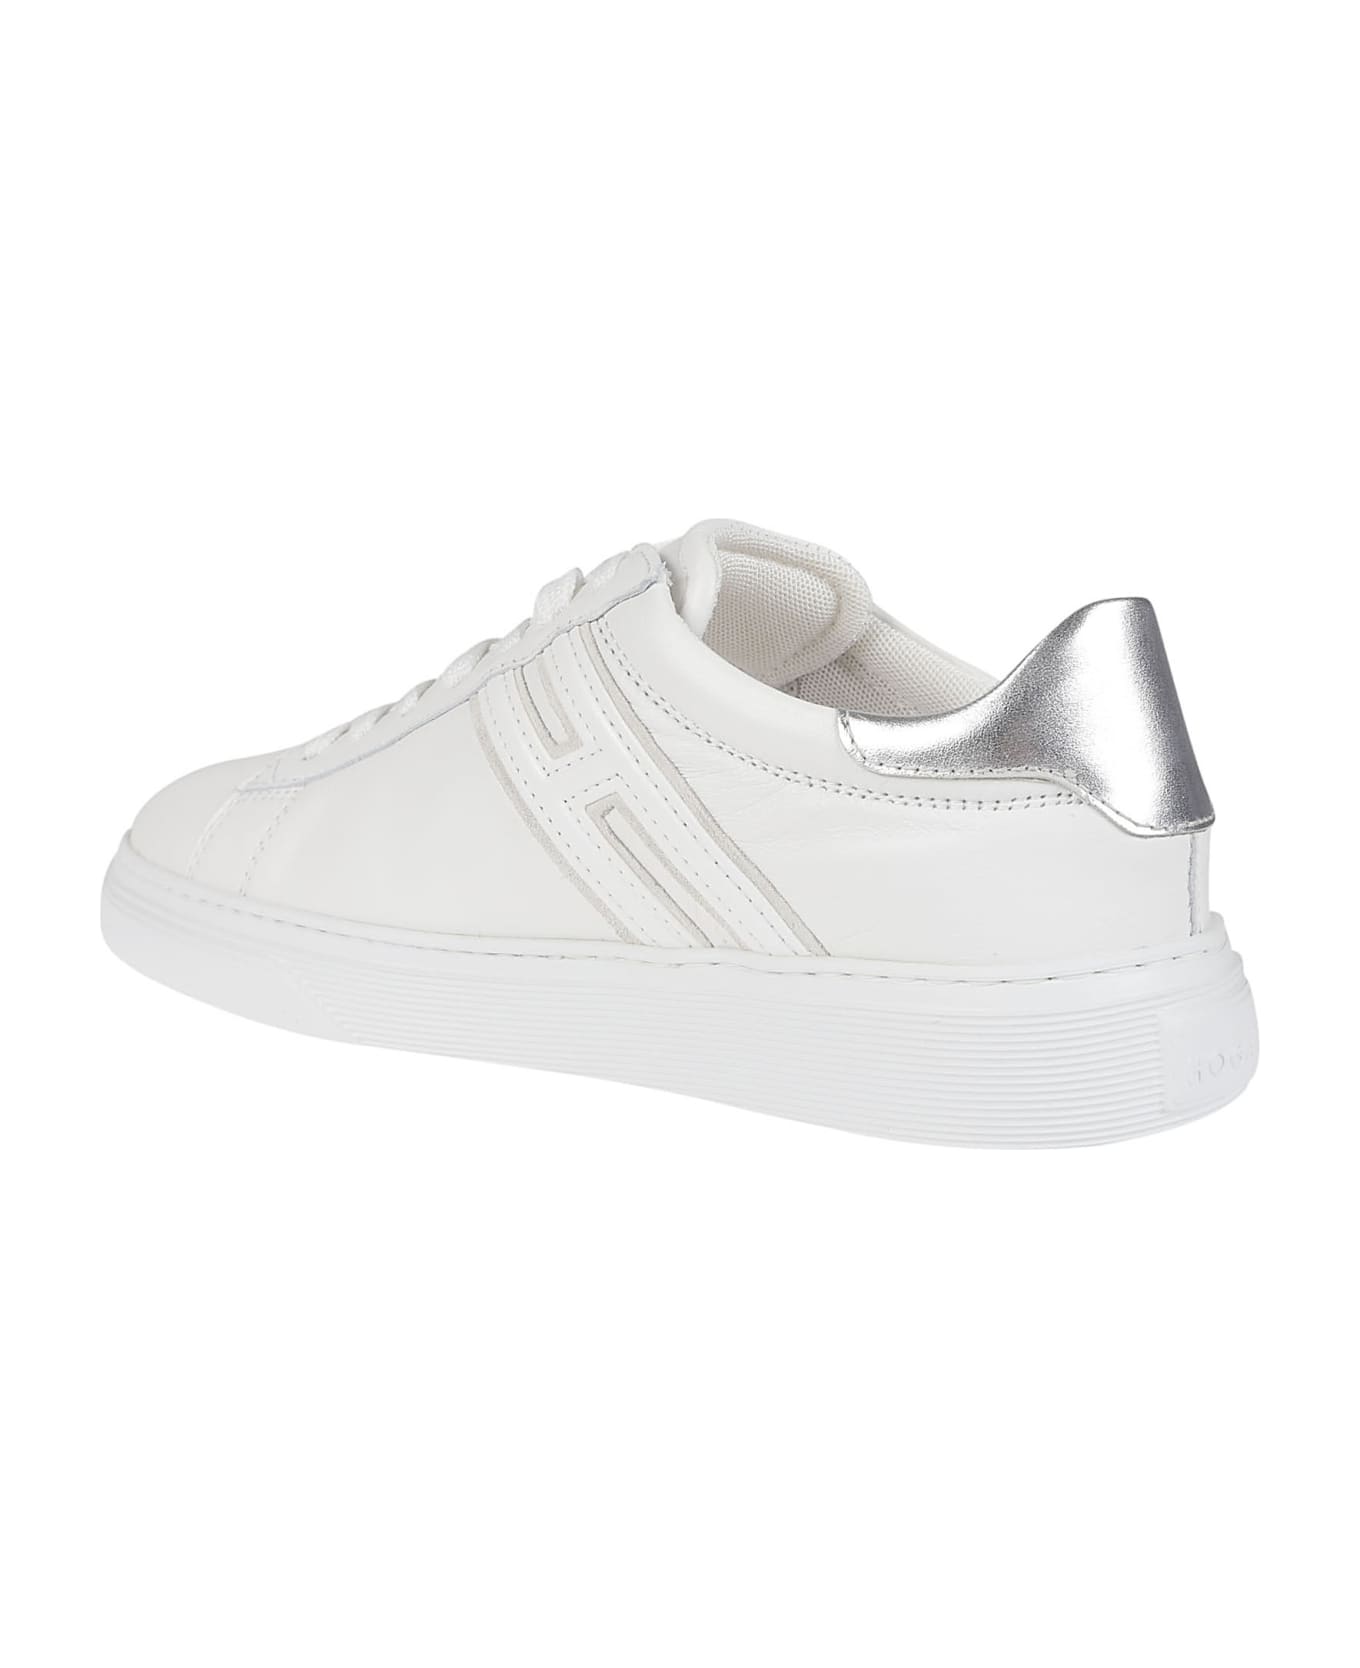 Hogan H365 Sneakers - Bianco/argento